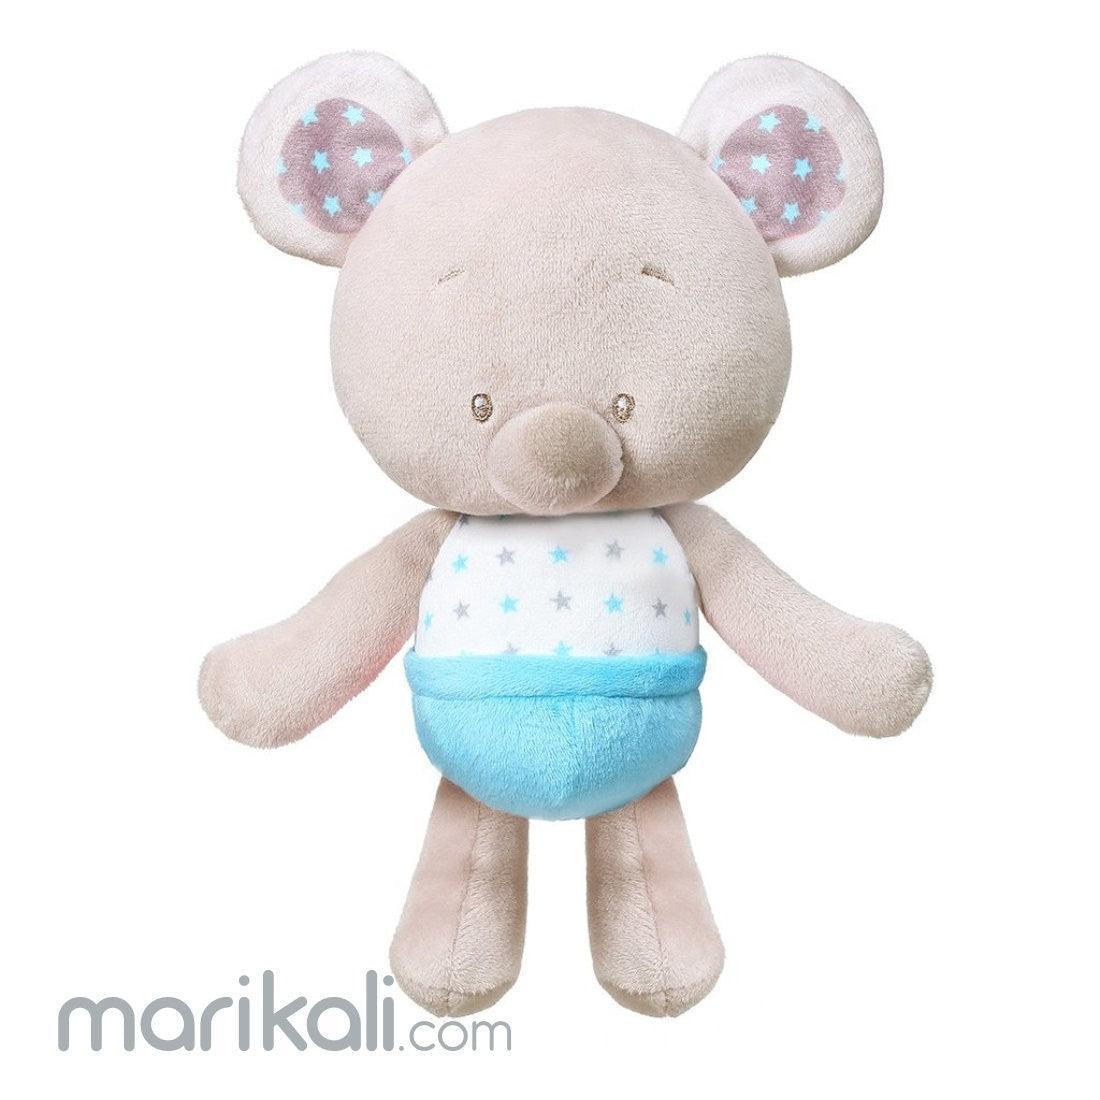 BabyOno - BabyOno Cuddly Toy Tony the Bear - Blue - Mari Kali Stores Cyprus